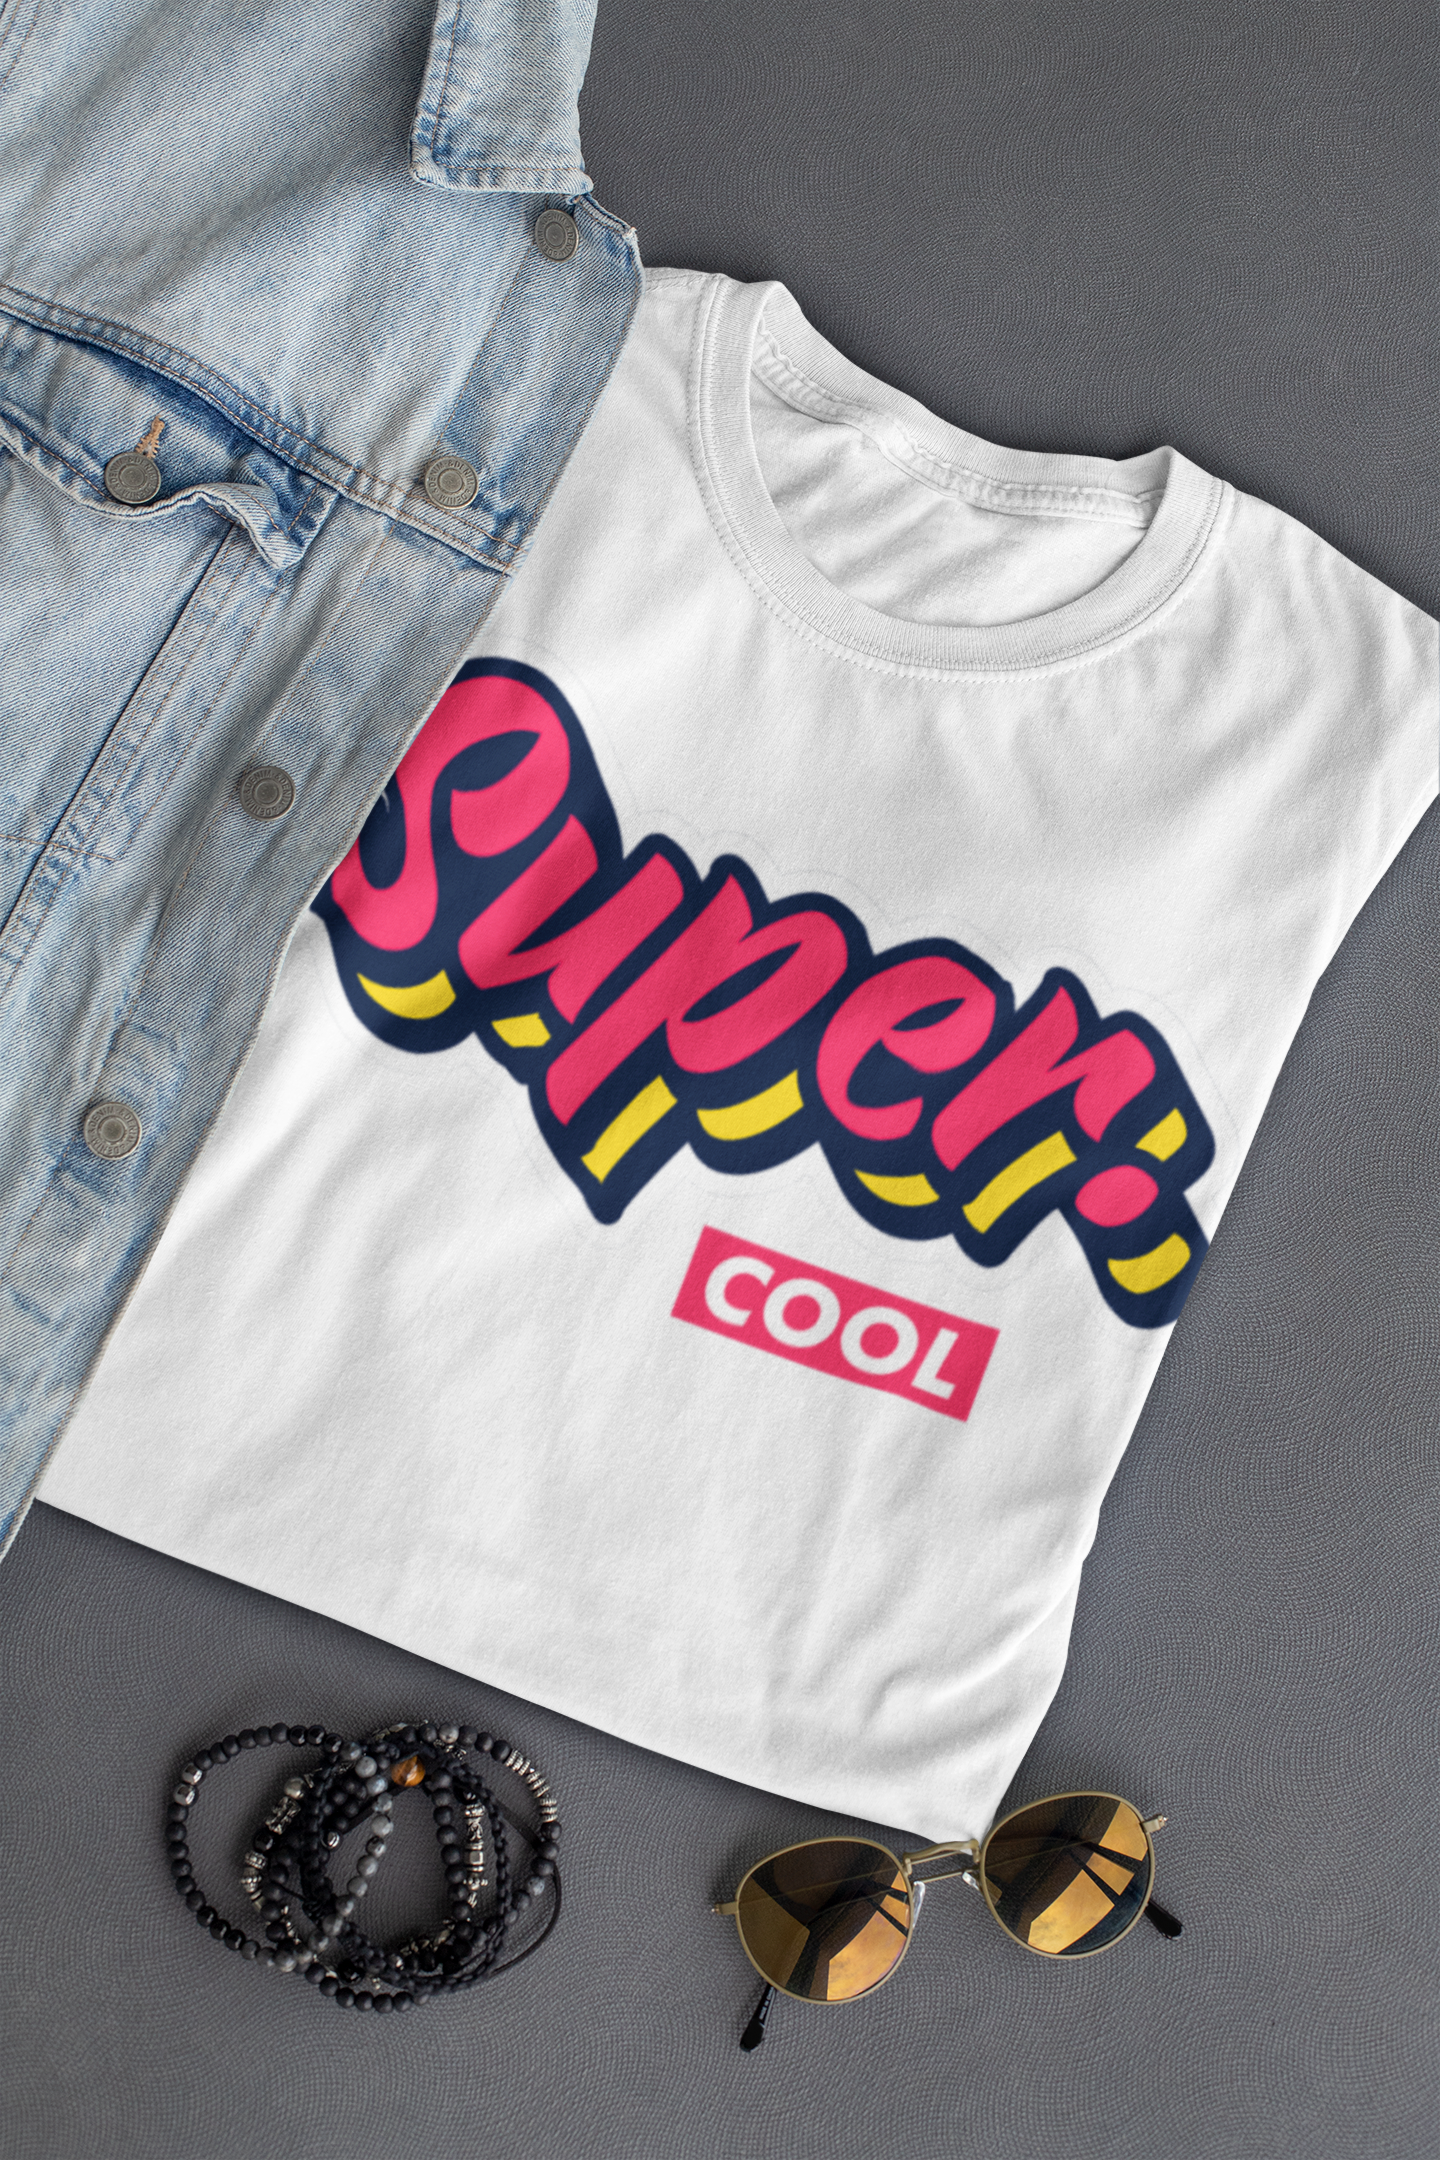 Super Cool - Gym T Shirt Strong Soul Shirts & Tops